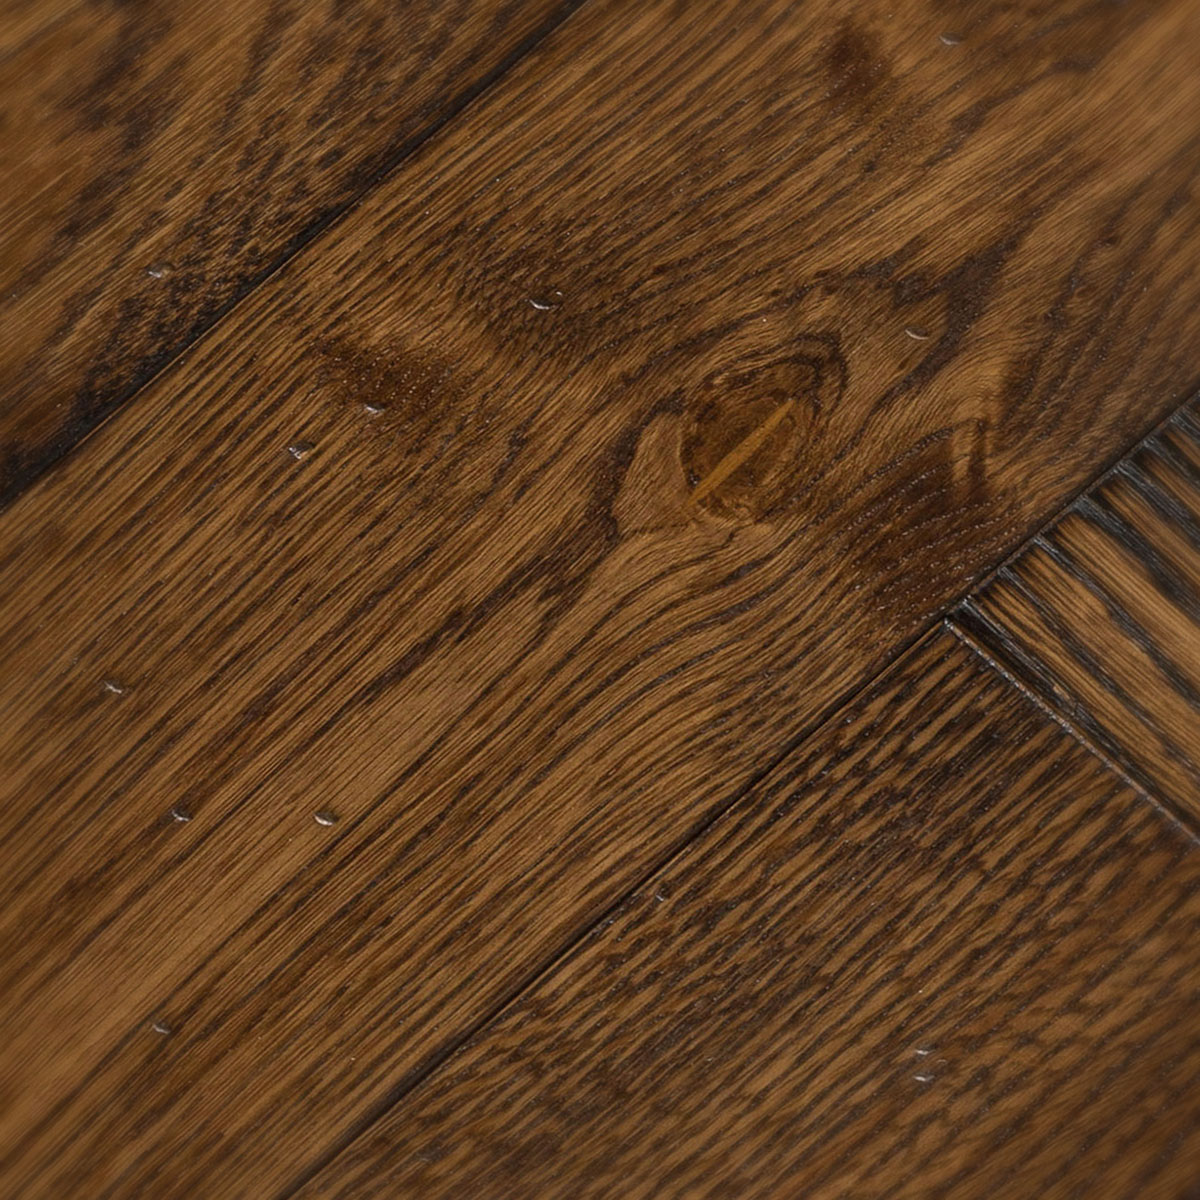 Highland Road Herringbone - Antique-Inspired Wood Floor